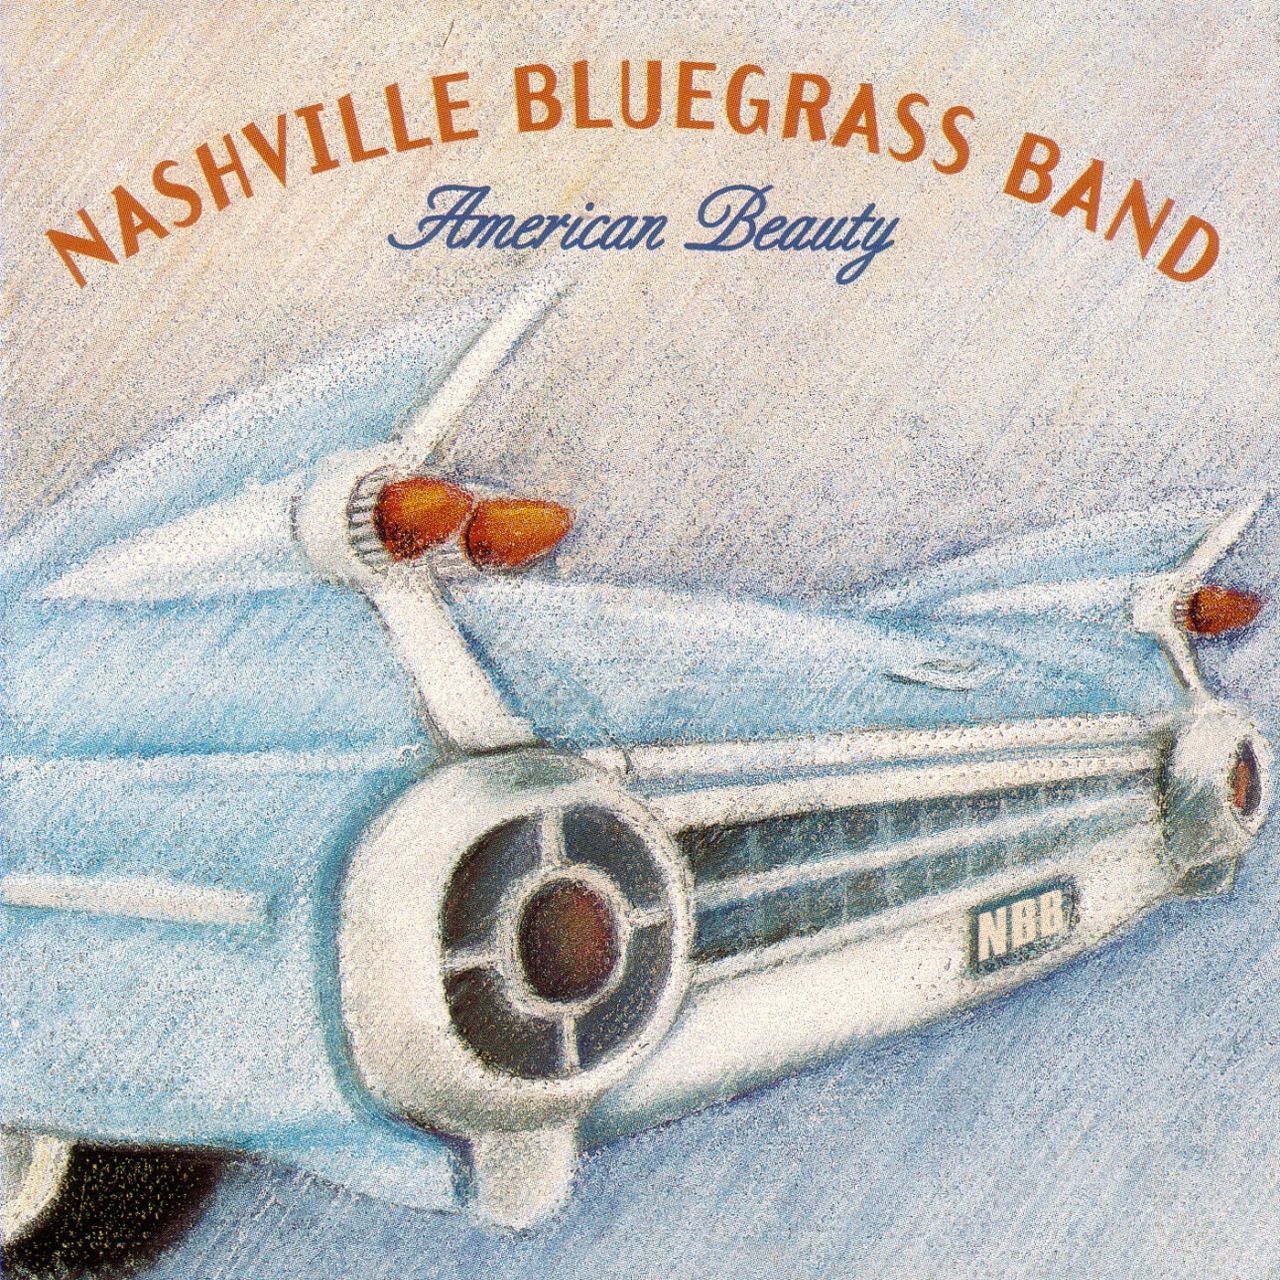 Nashville Bluegrass Band - American Beauty cover album